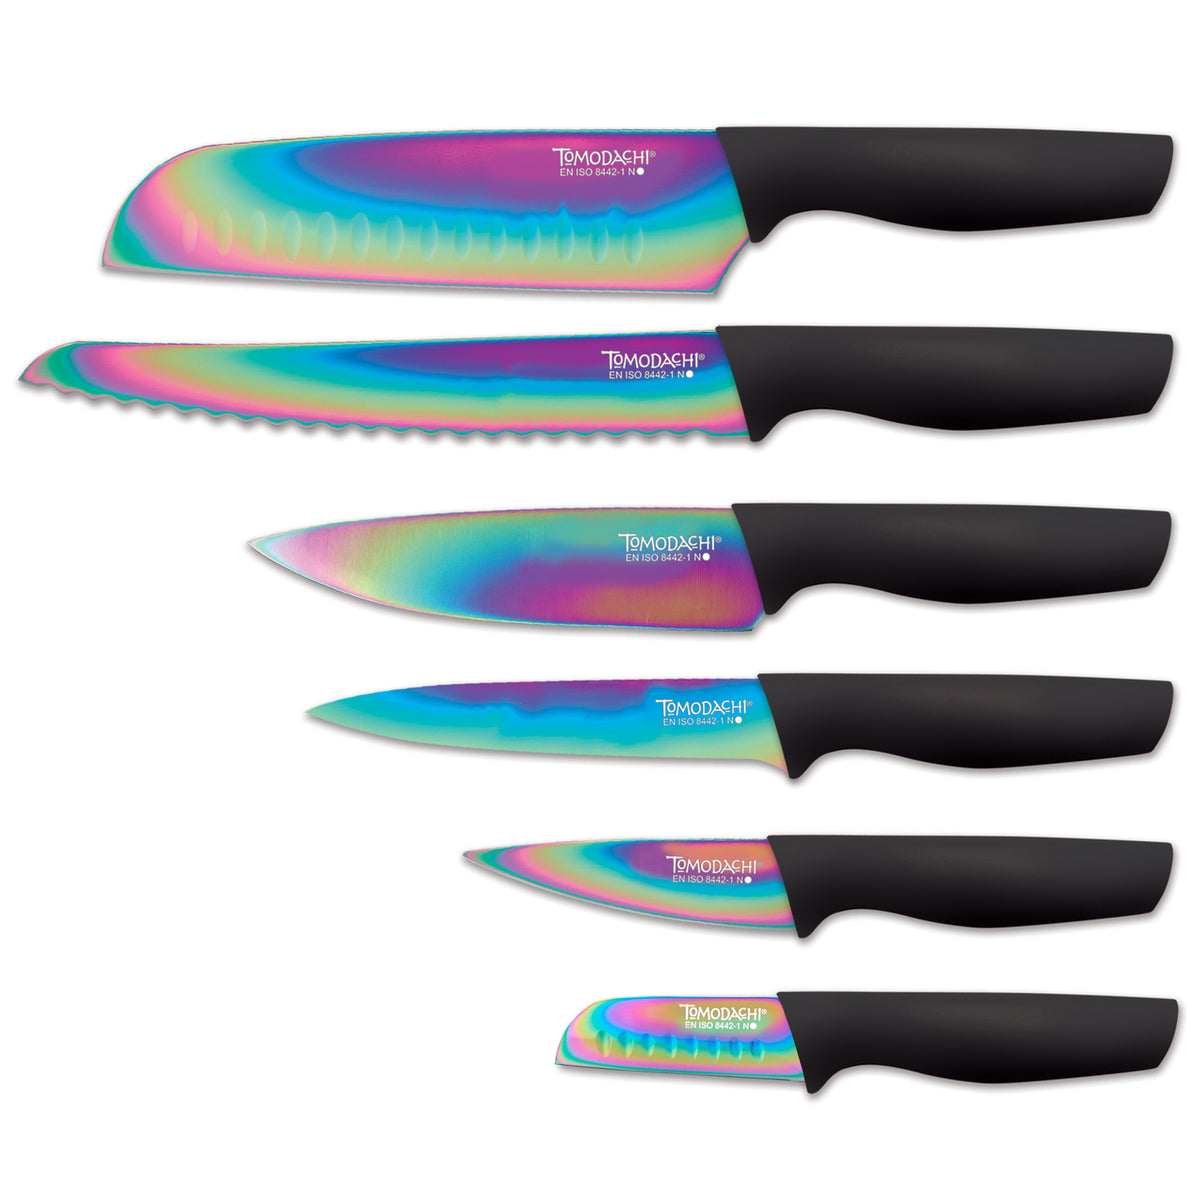 Rainbow Black 12 Piece Cutlery Set – Oneida